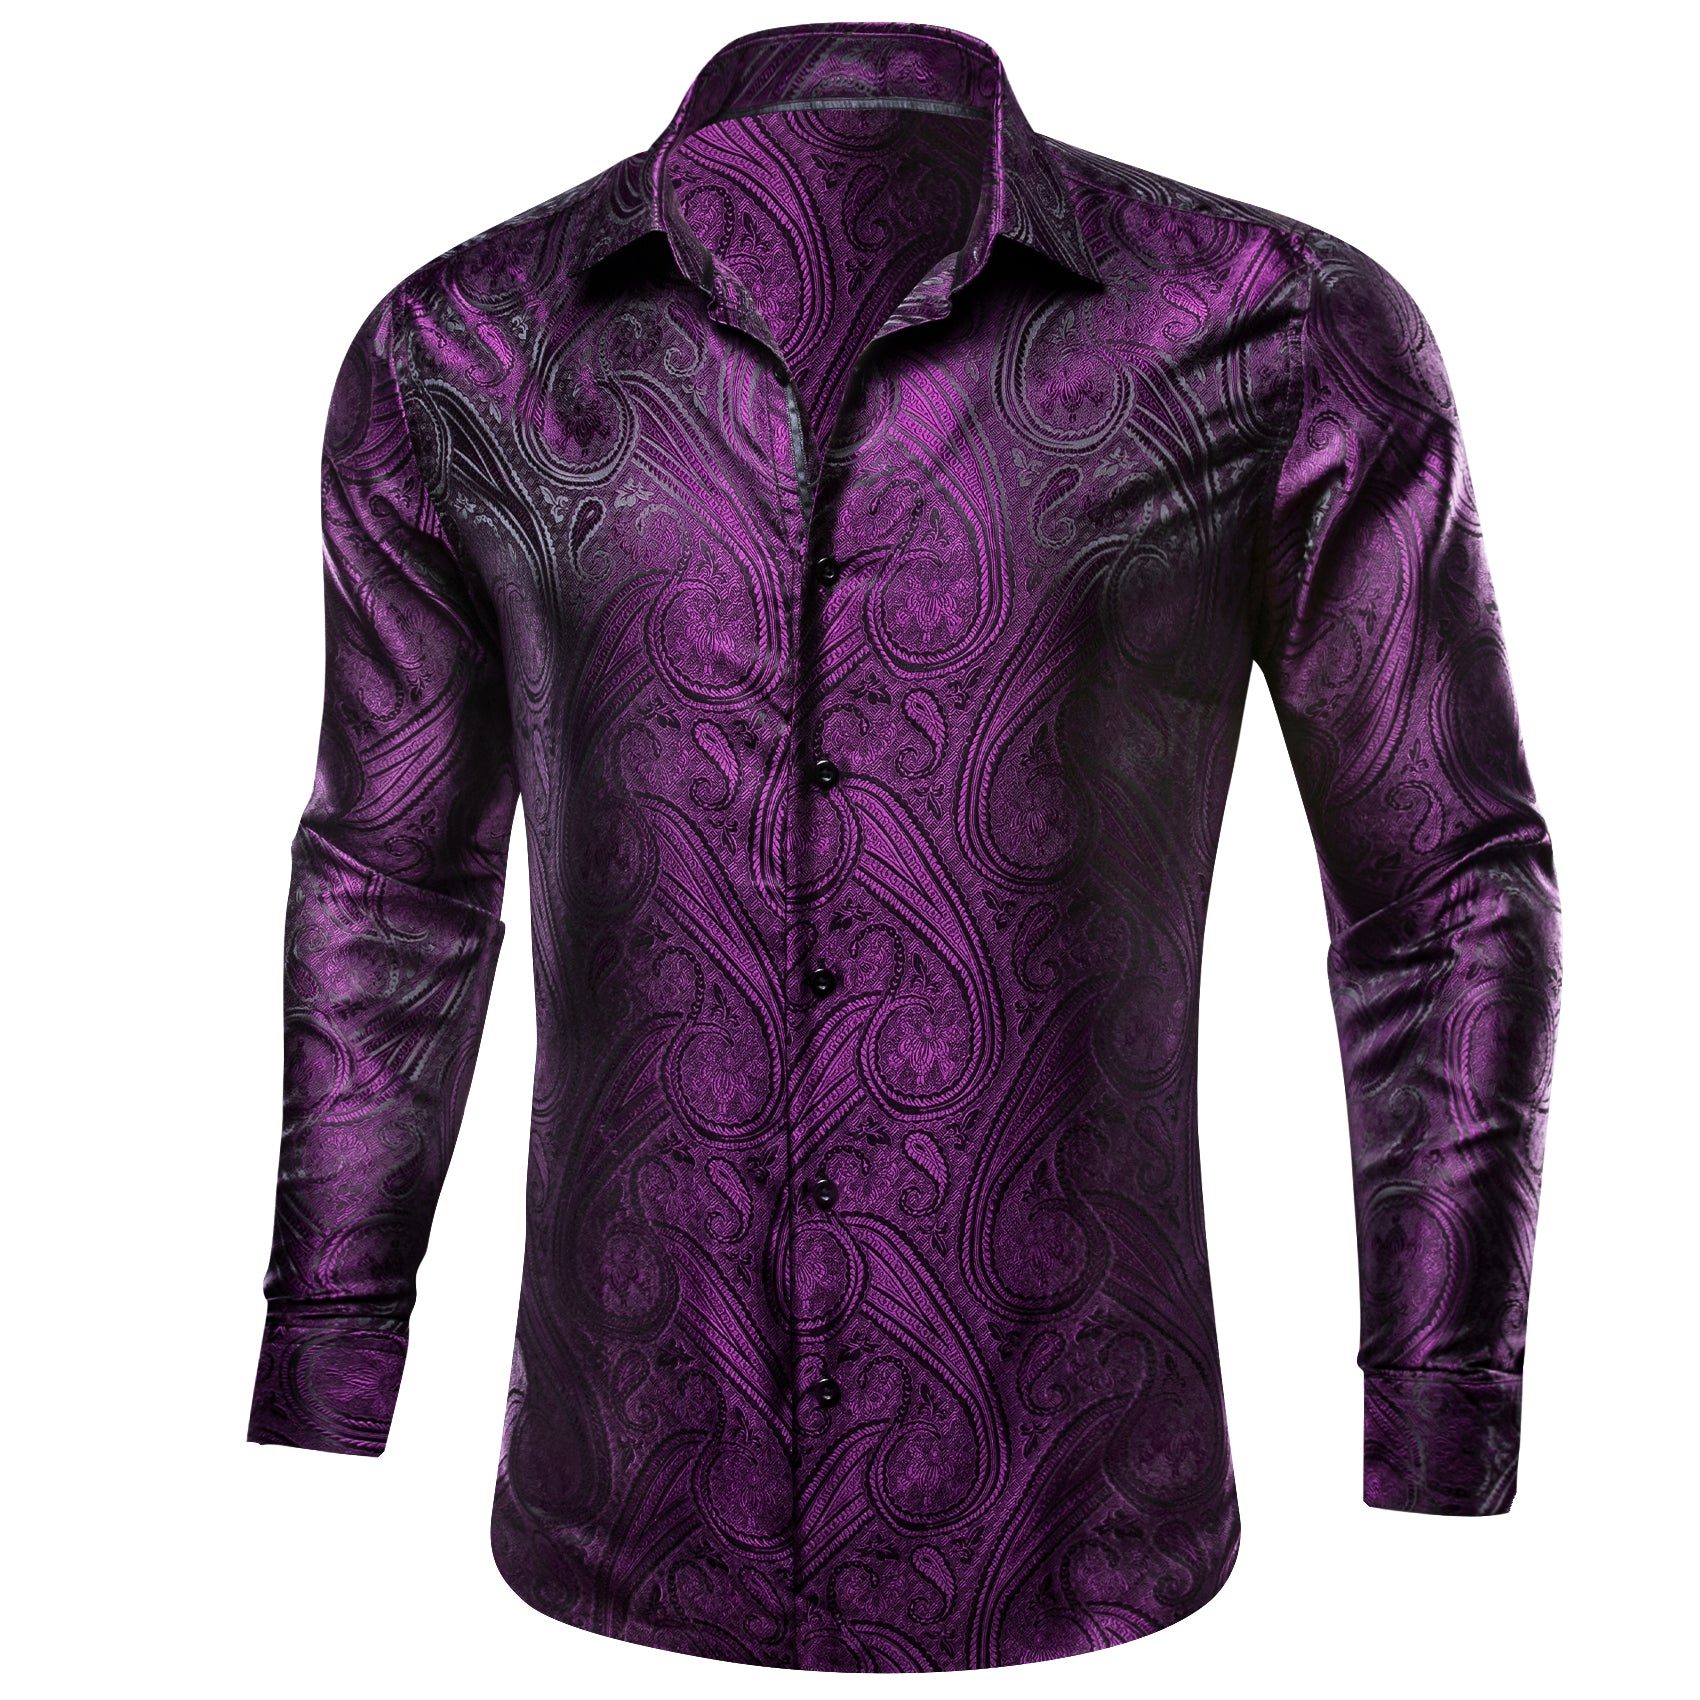 Barry.wang Button Down Shirt Men's Purple Silk Paisley Long Sleeve Daily Slim-fit Shirt